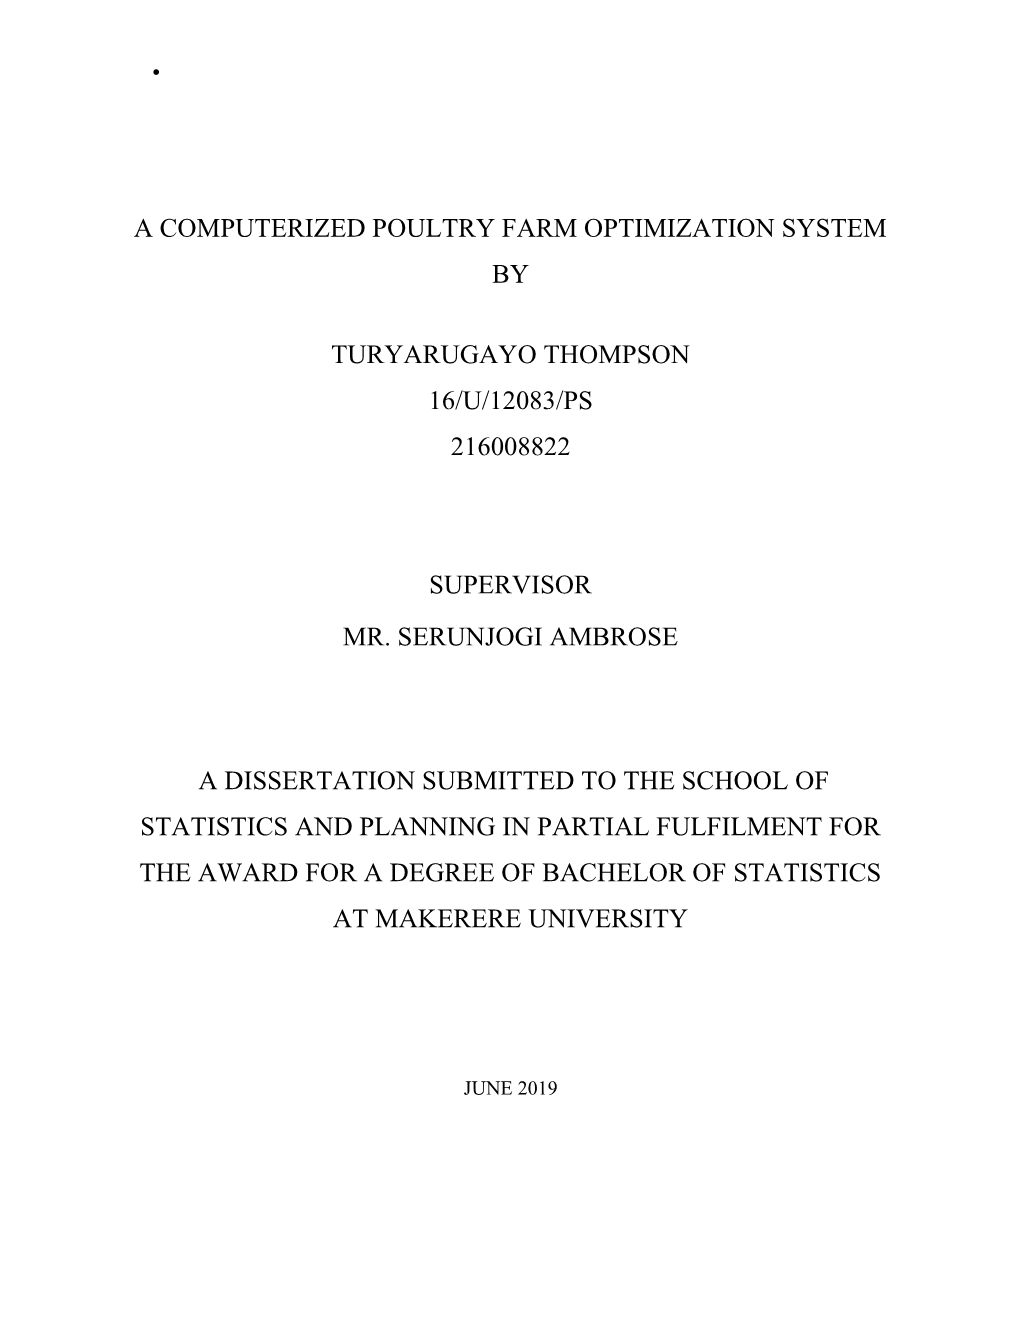 A Computerized Poultry Farm Optimization System By